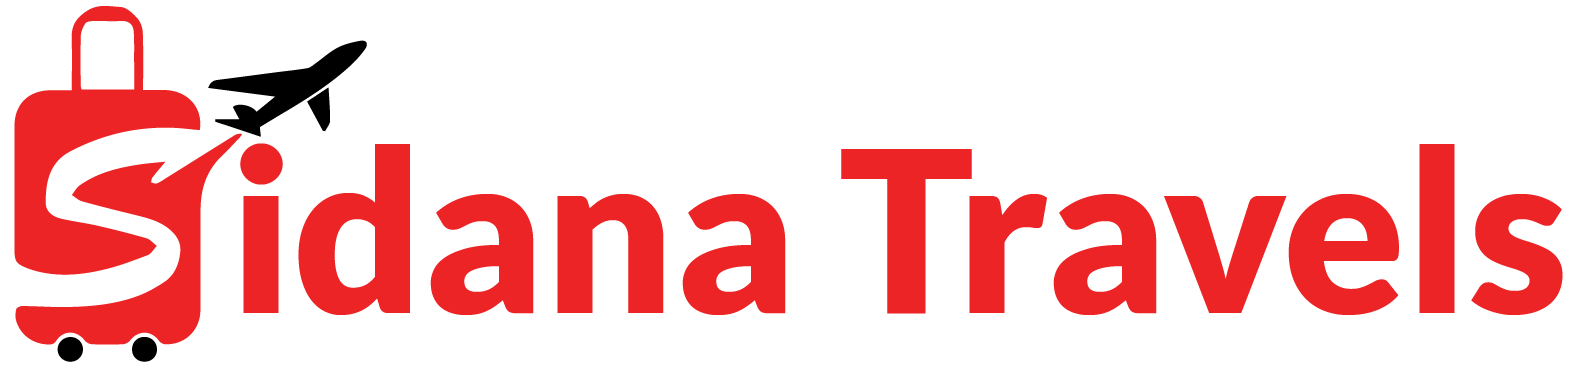 sidanatravels logo